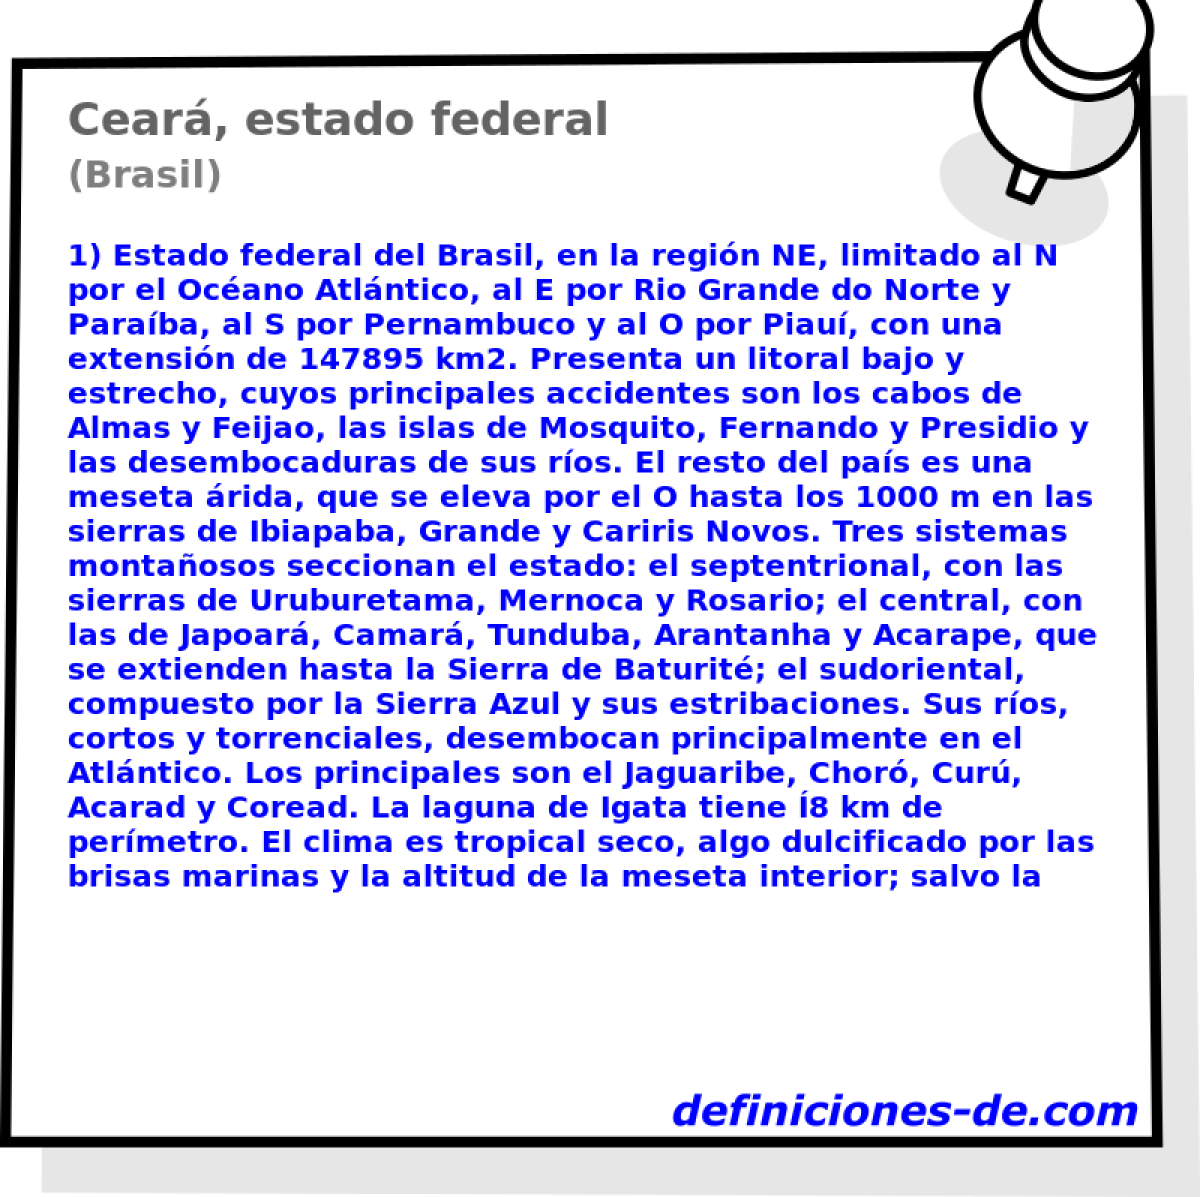 Cear, estado federal (Brasil)